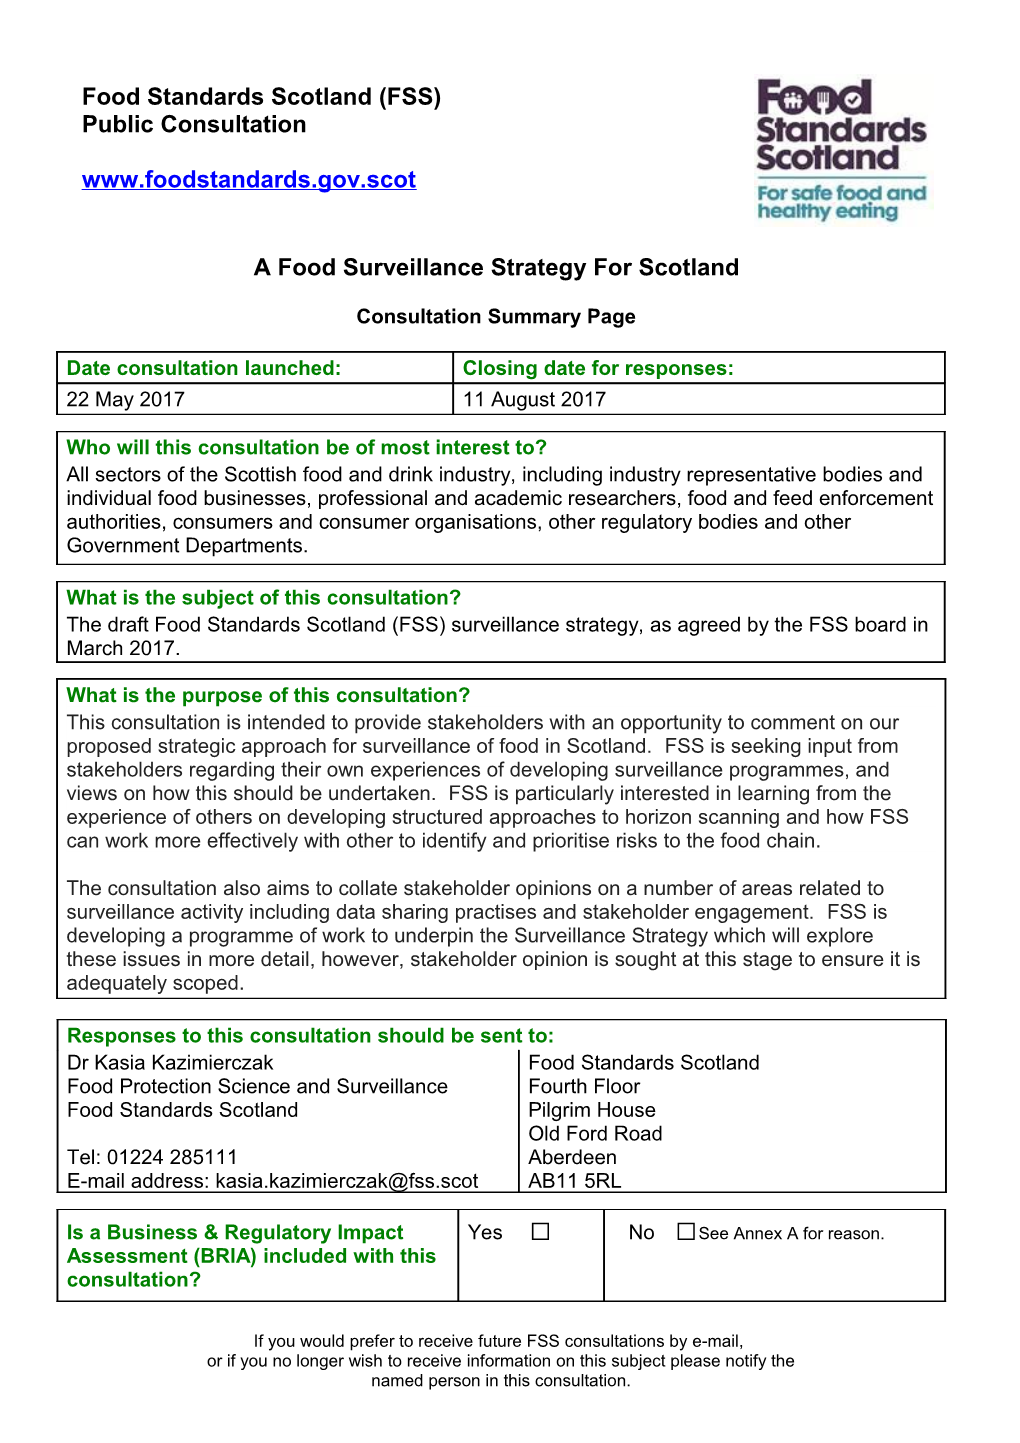 A Food Surveillance Strategy for Scotland